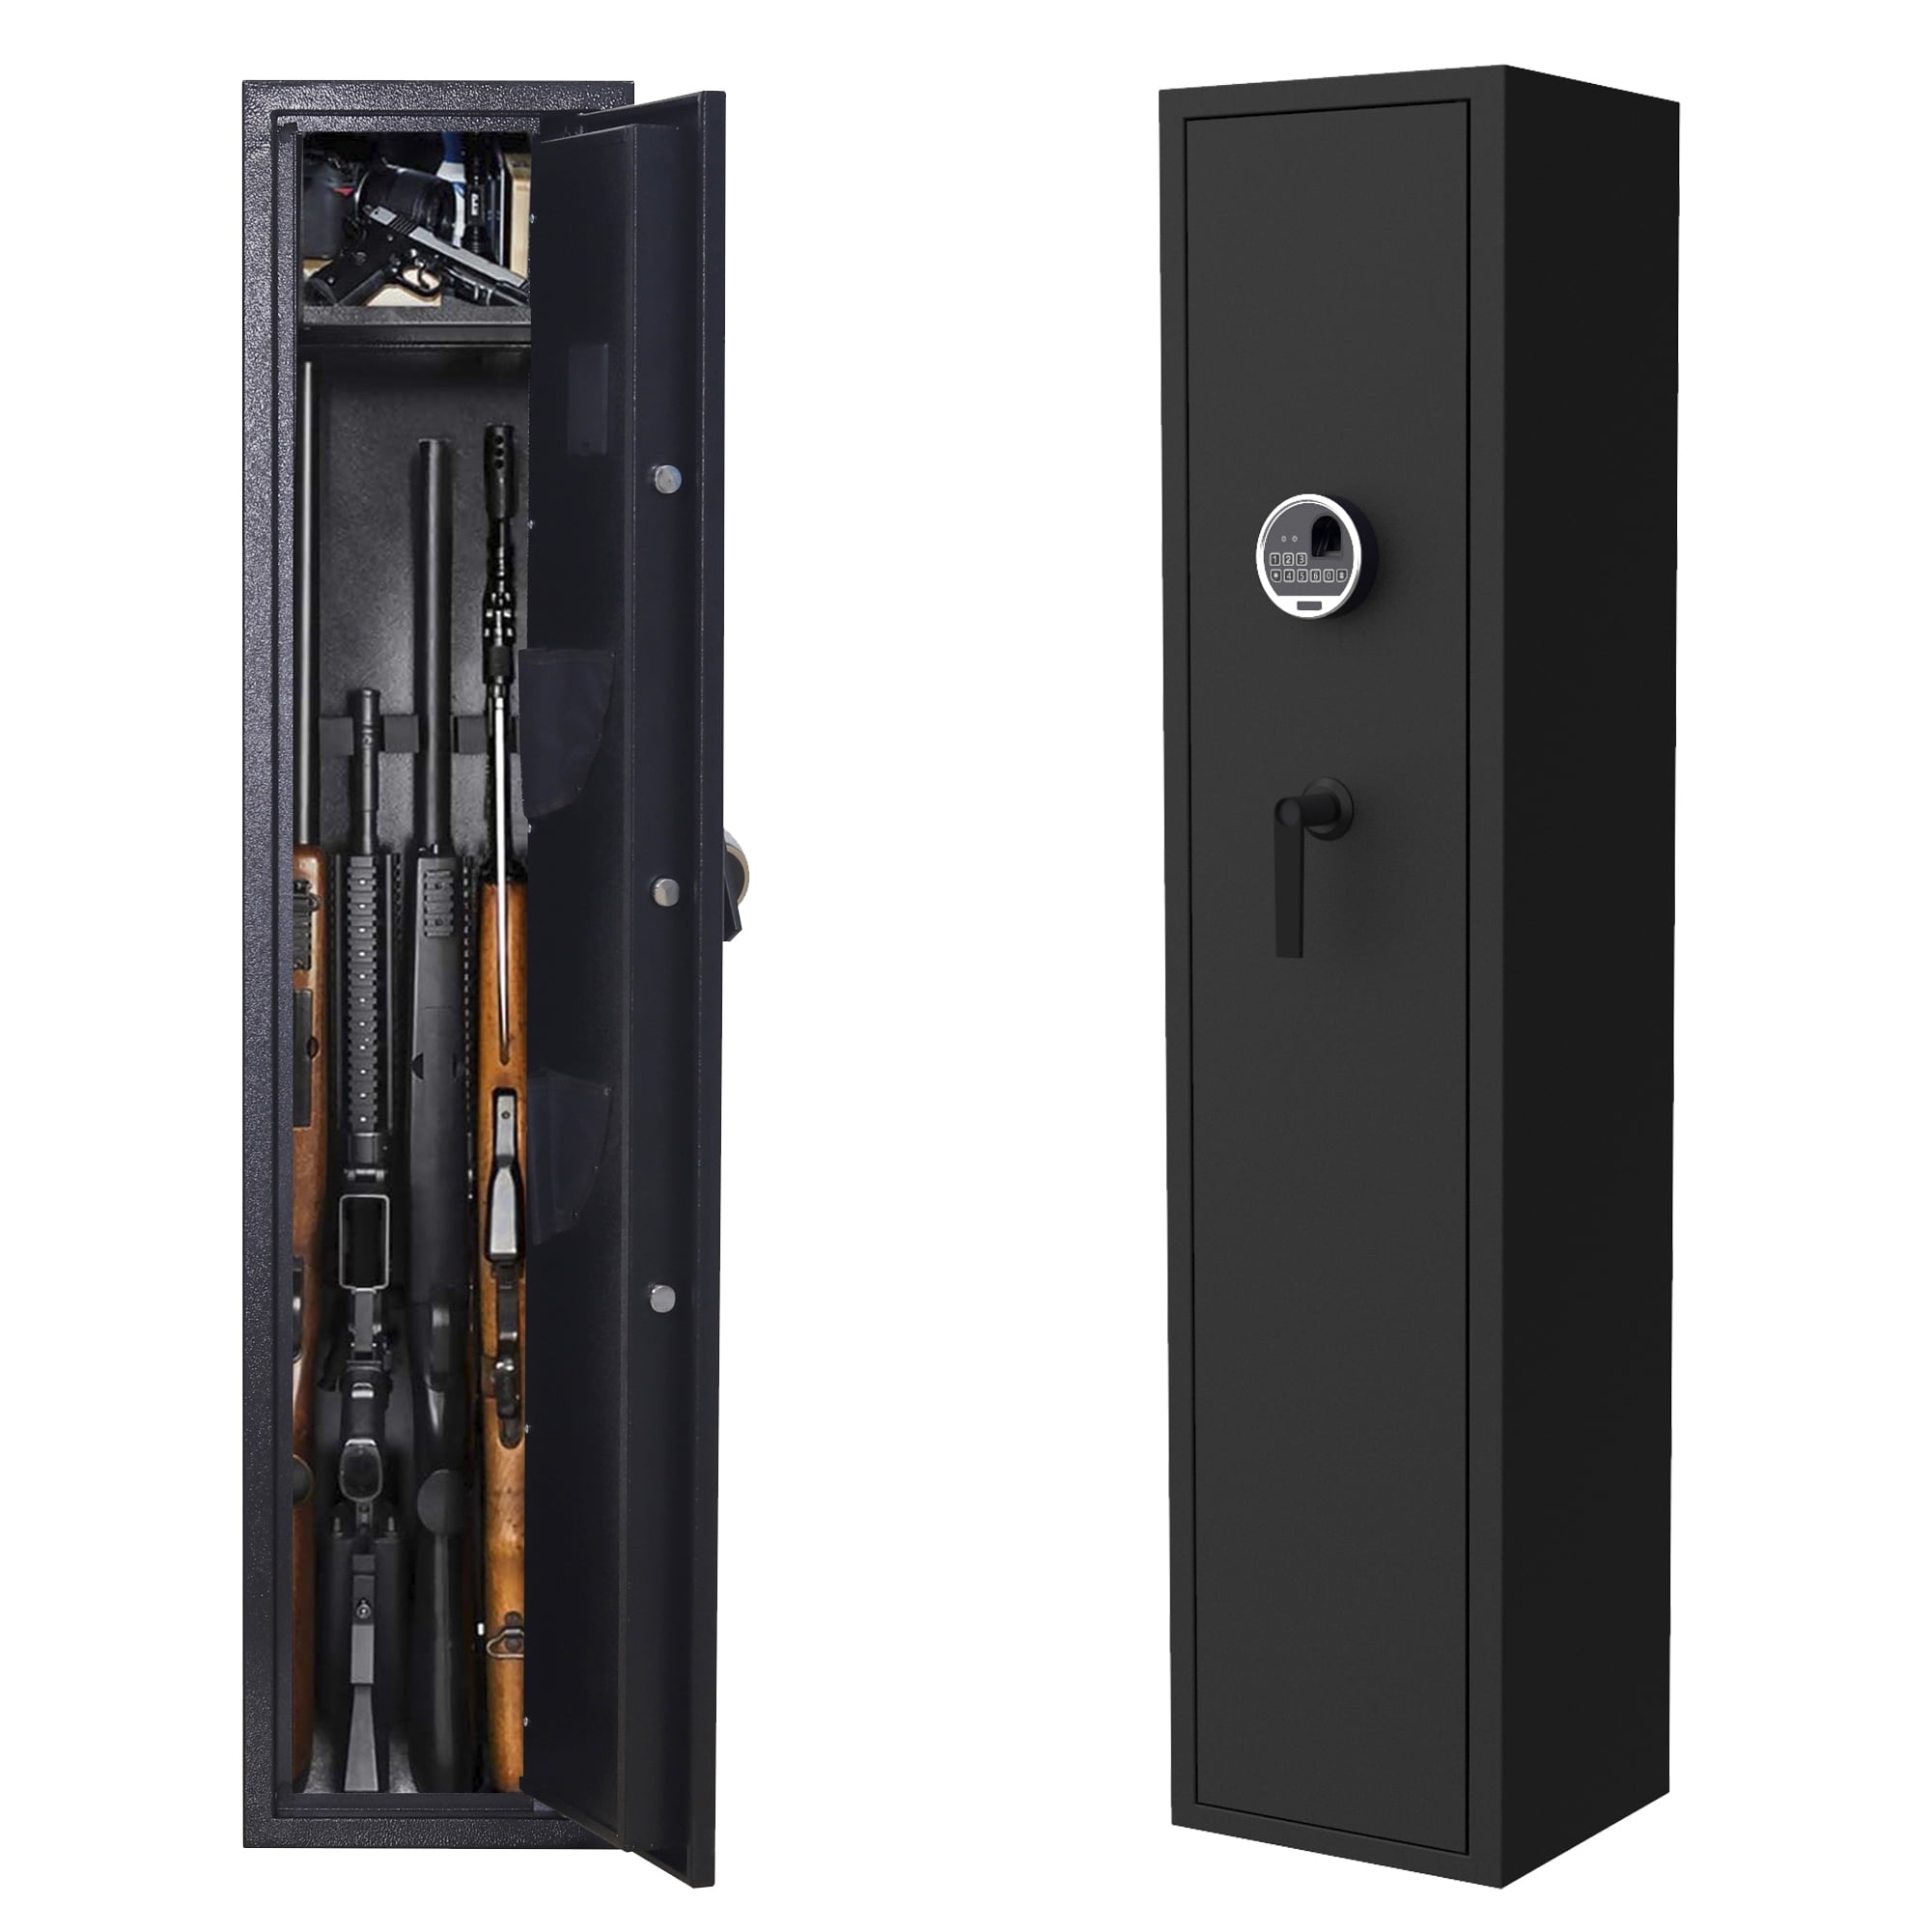 Details about   Rifle Safe Long Gun Safe Quick Access Metal Rifle Gun Security Cabinet USA 